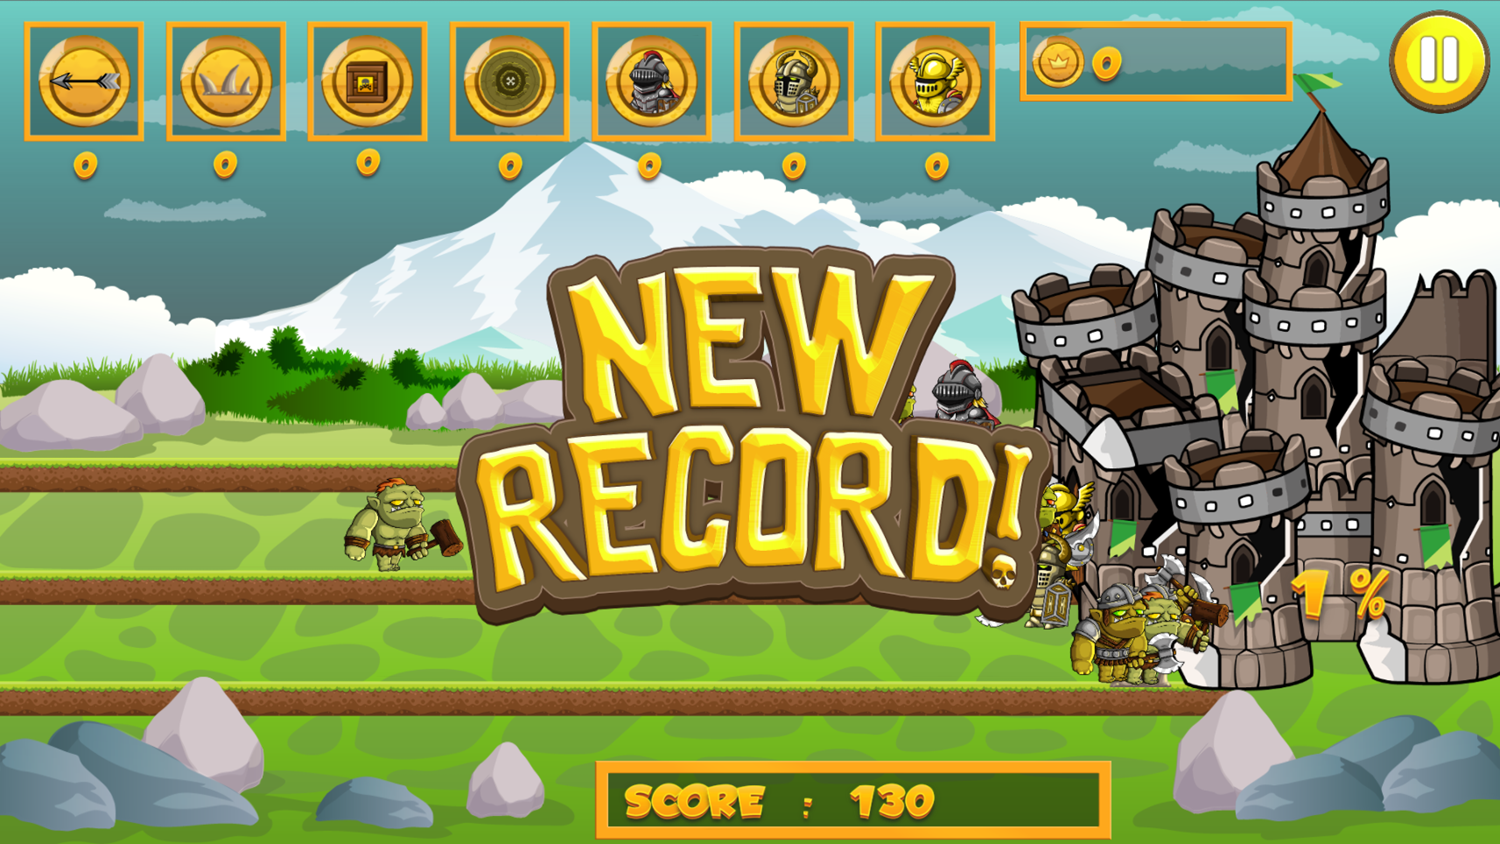 Knight vs Orc Game New Record Screenshot.